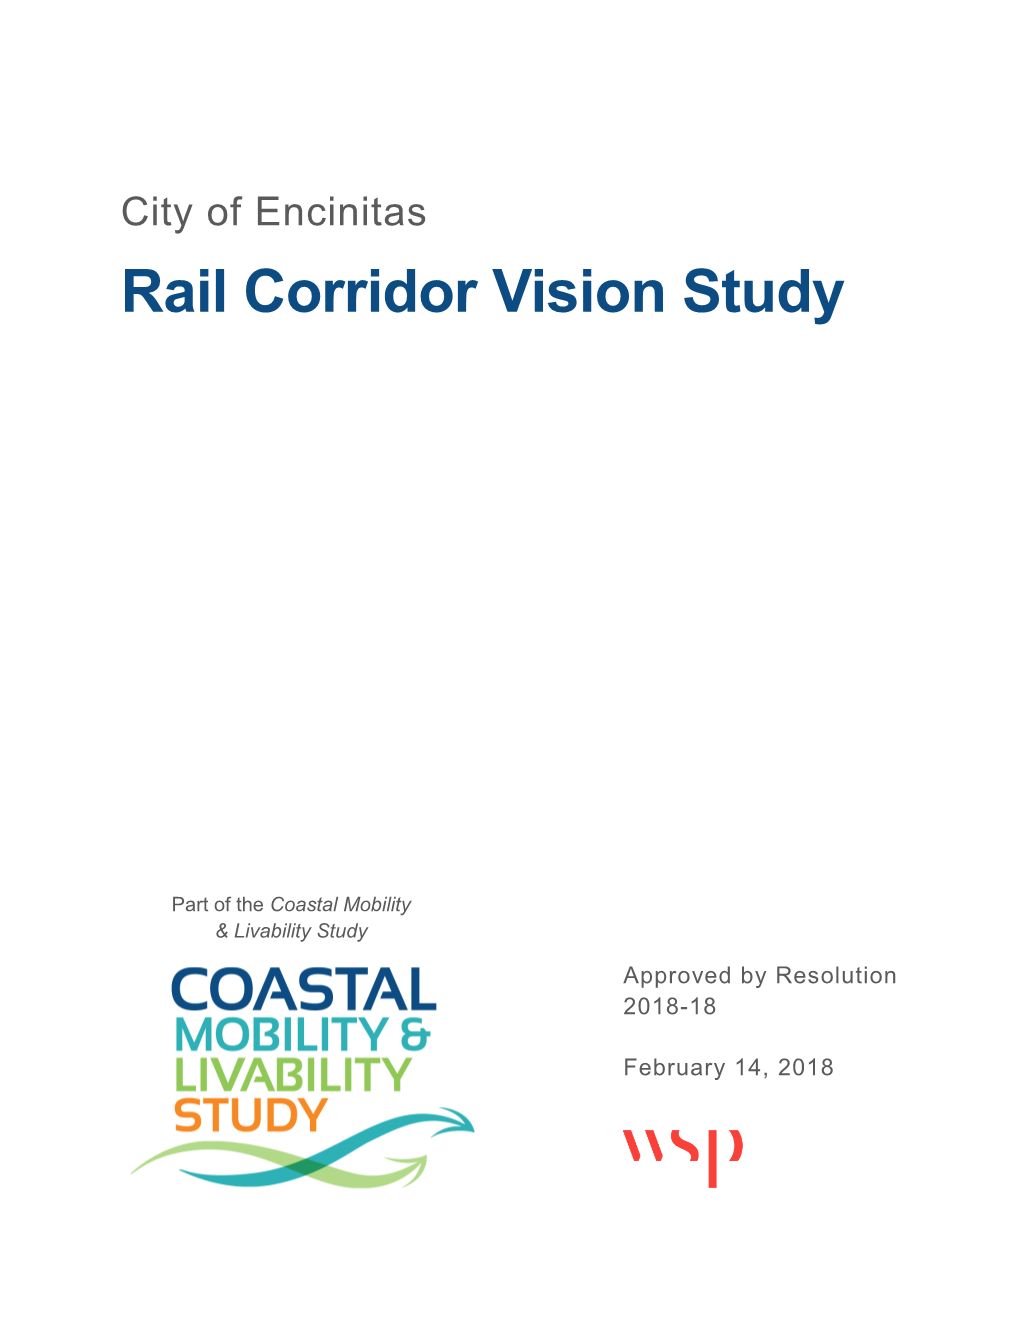 Encinitas Rail Corridor Vision Study